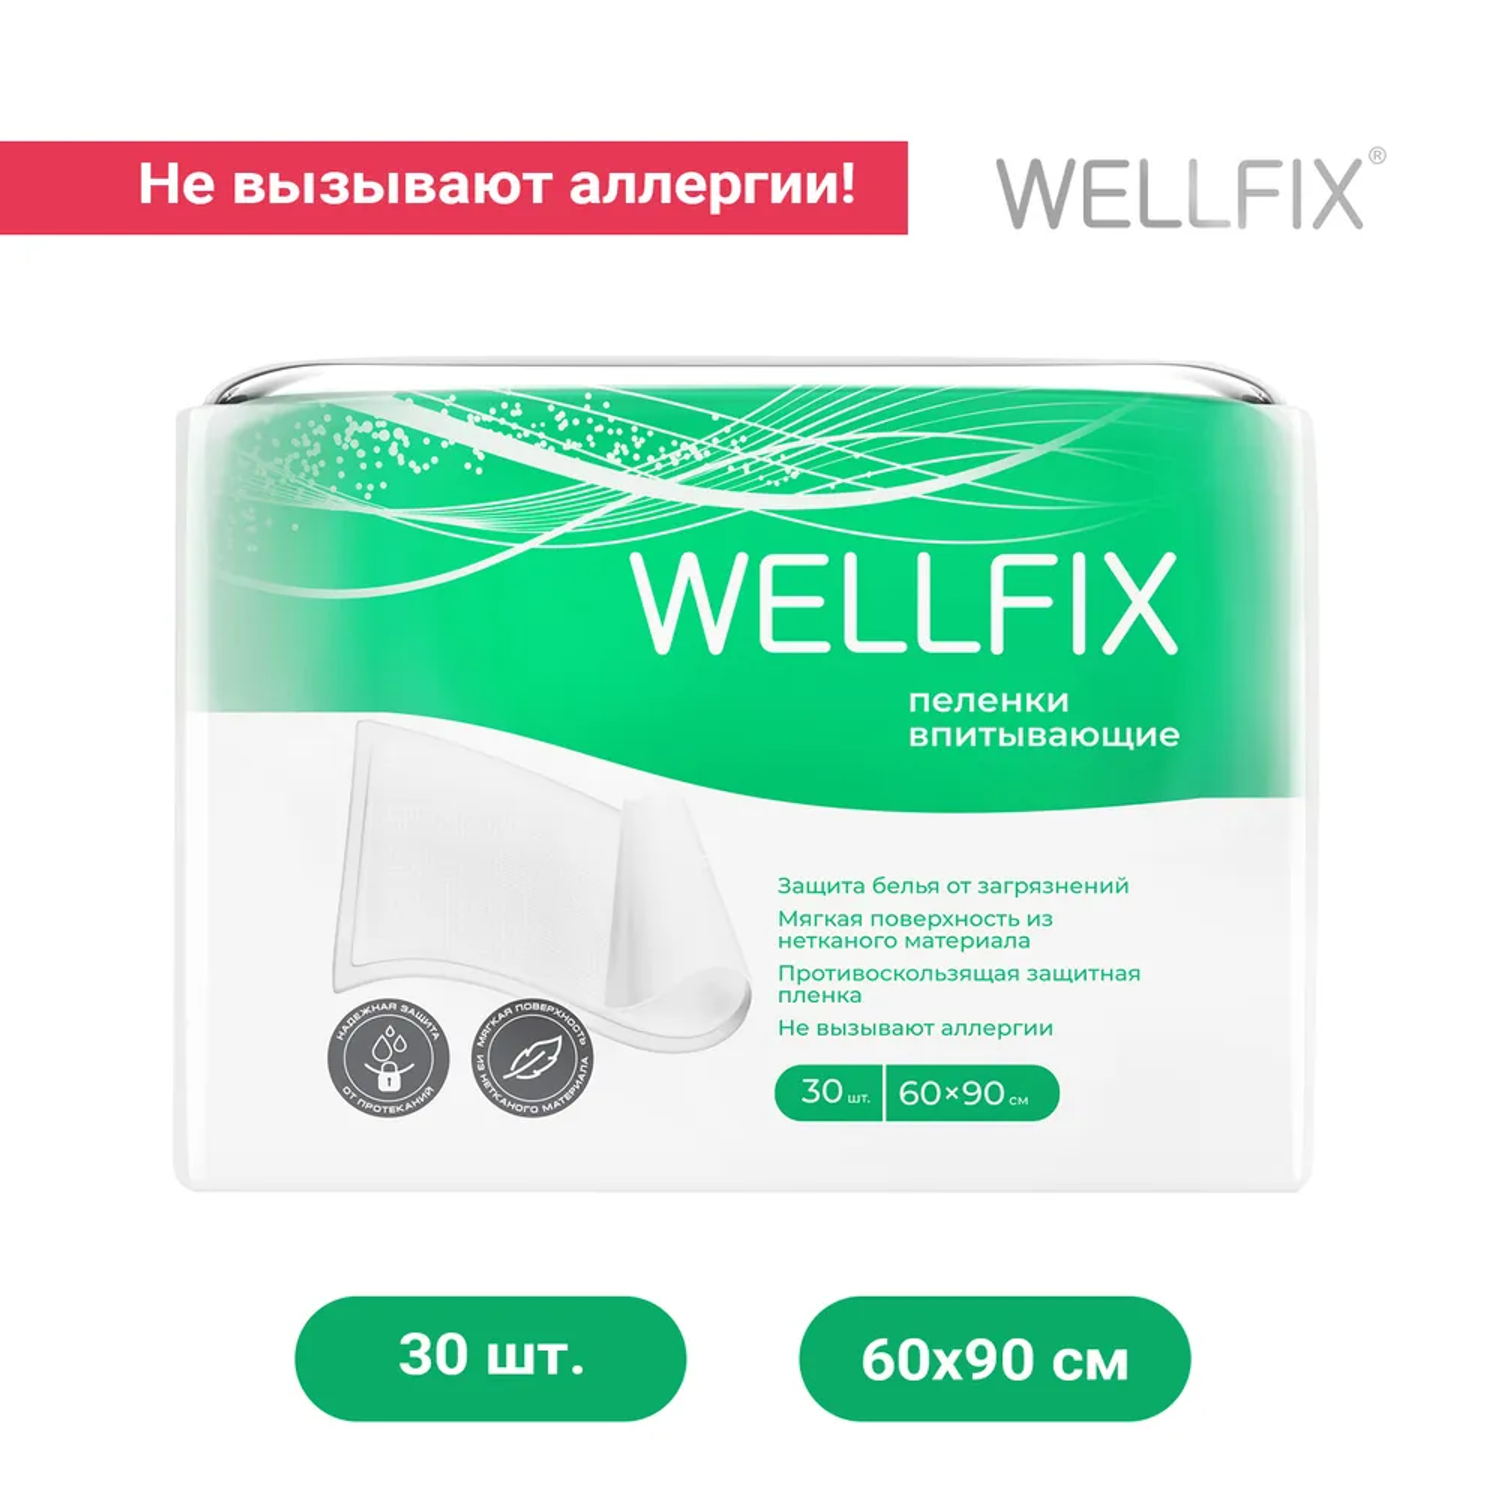 Пеленки медицинские Wellfix впитывающие размер 60х90 30 штук - фото 2